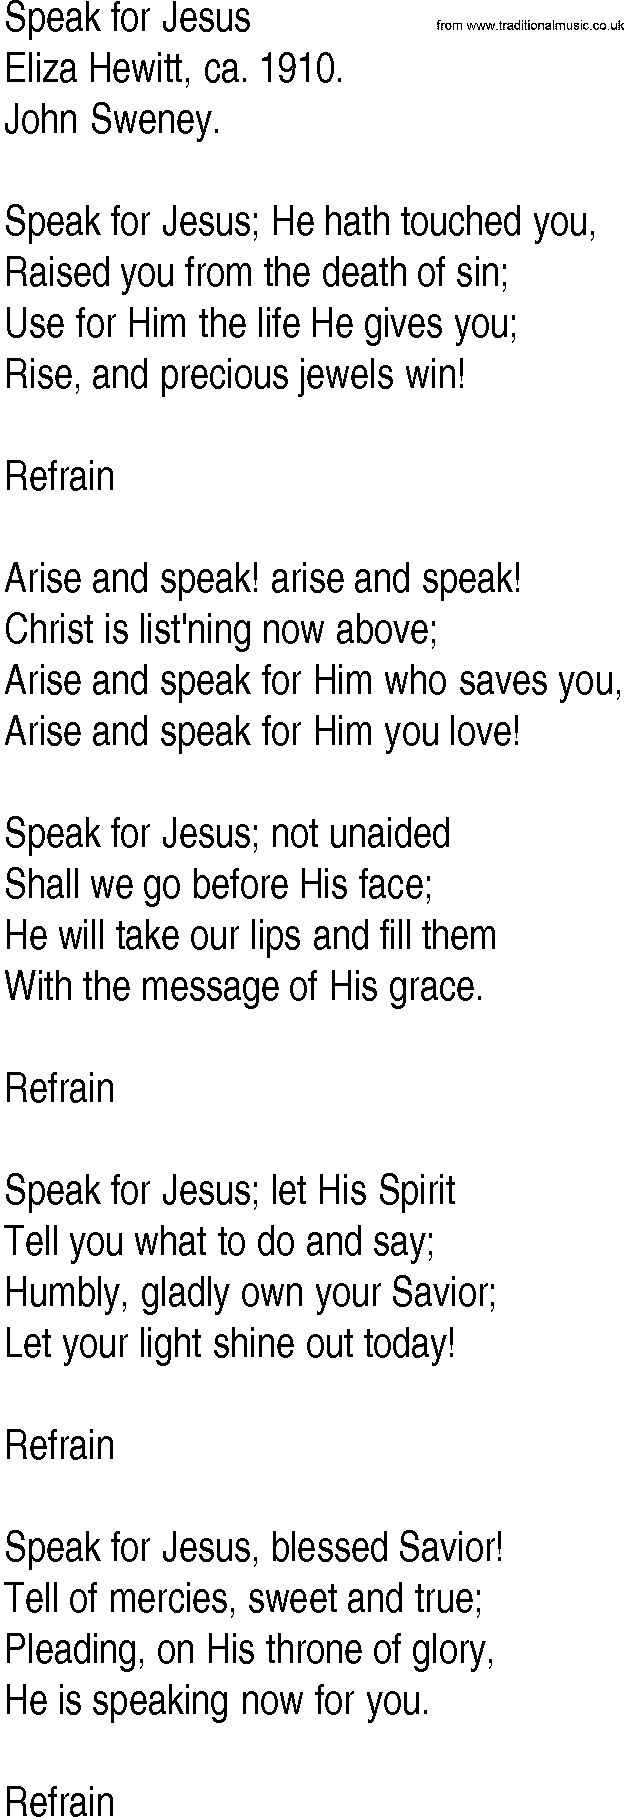 Hymn and Gospel Song: Speak for Jesus by Eliza Hewitt ca lyrics